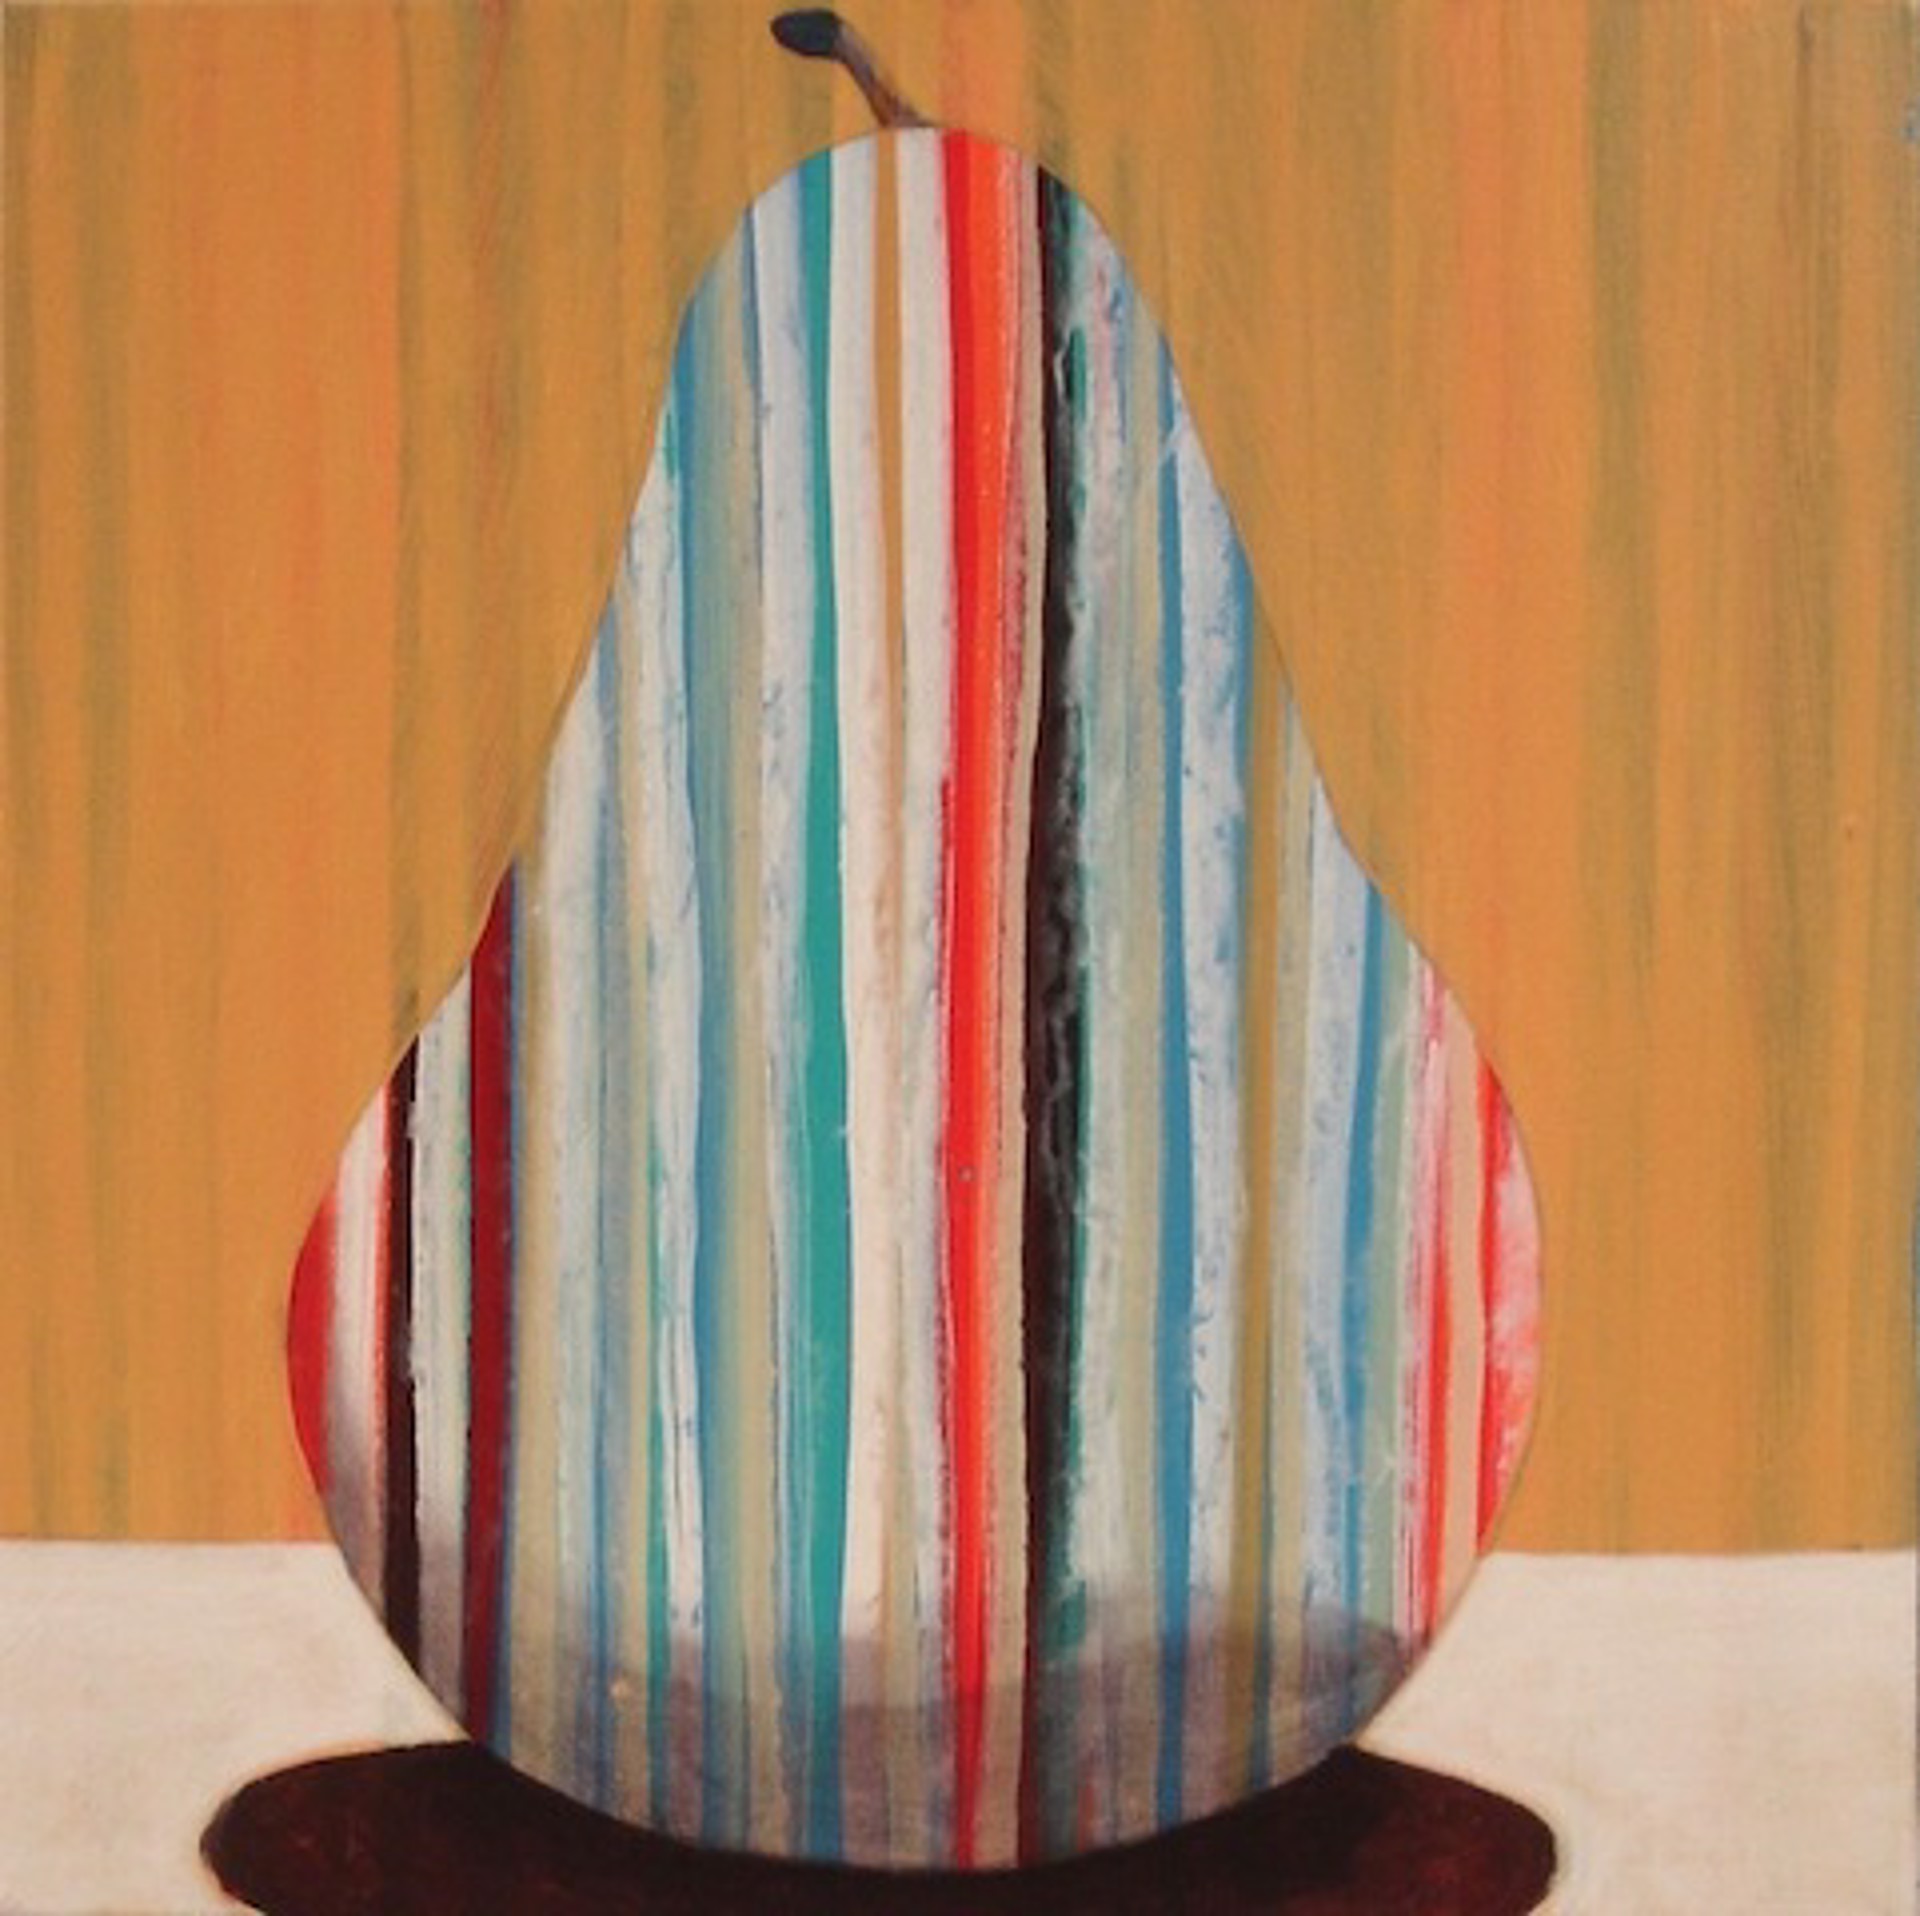 Pear 103 by Brian Hibbard